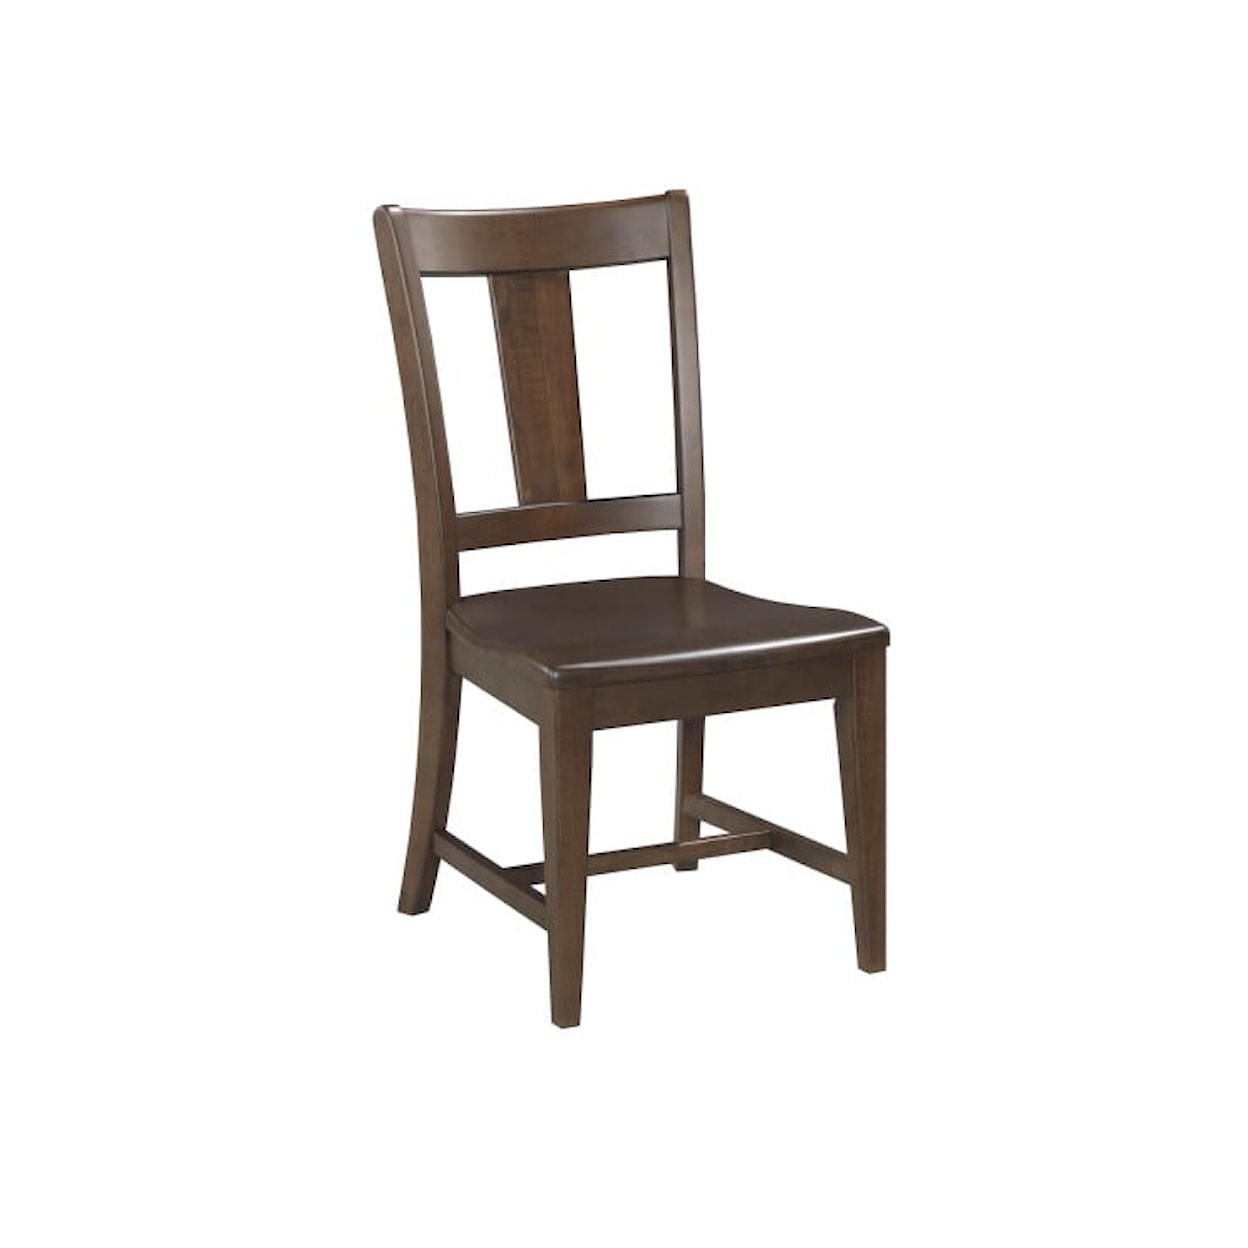 Kincaid Furniture Kafe' Splat Back Chair, Mocha